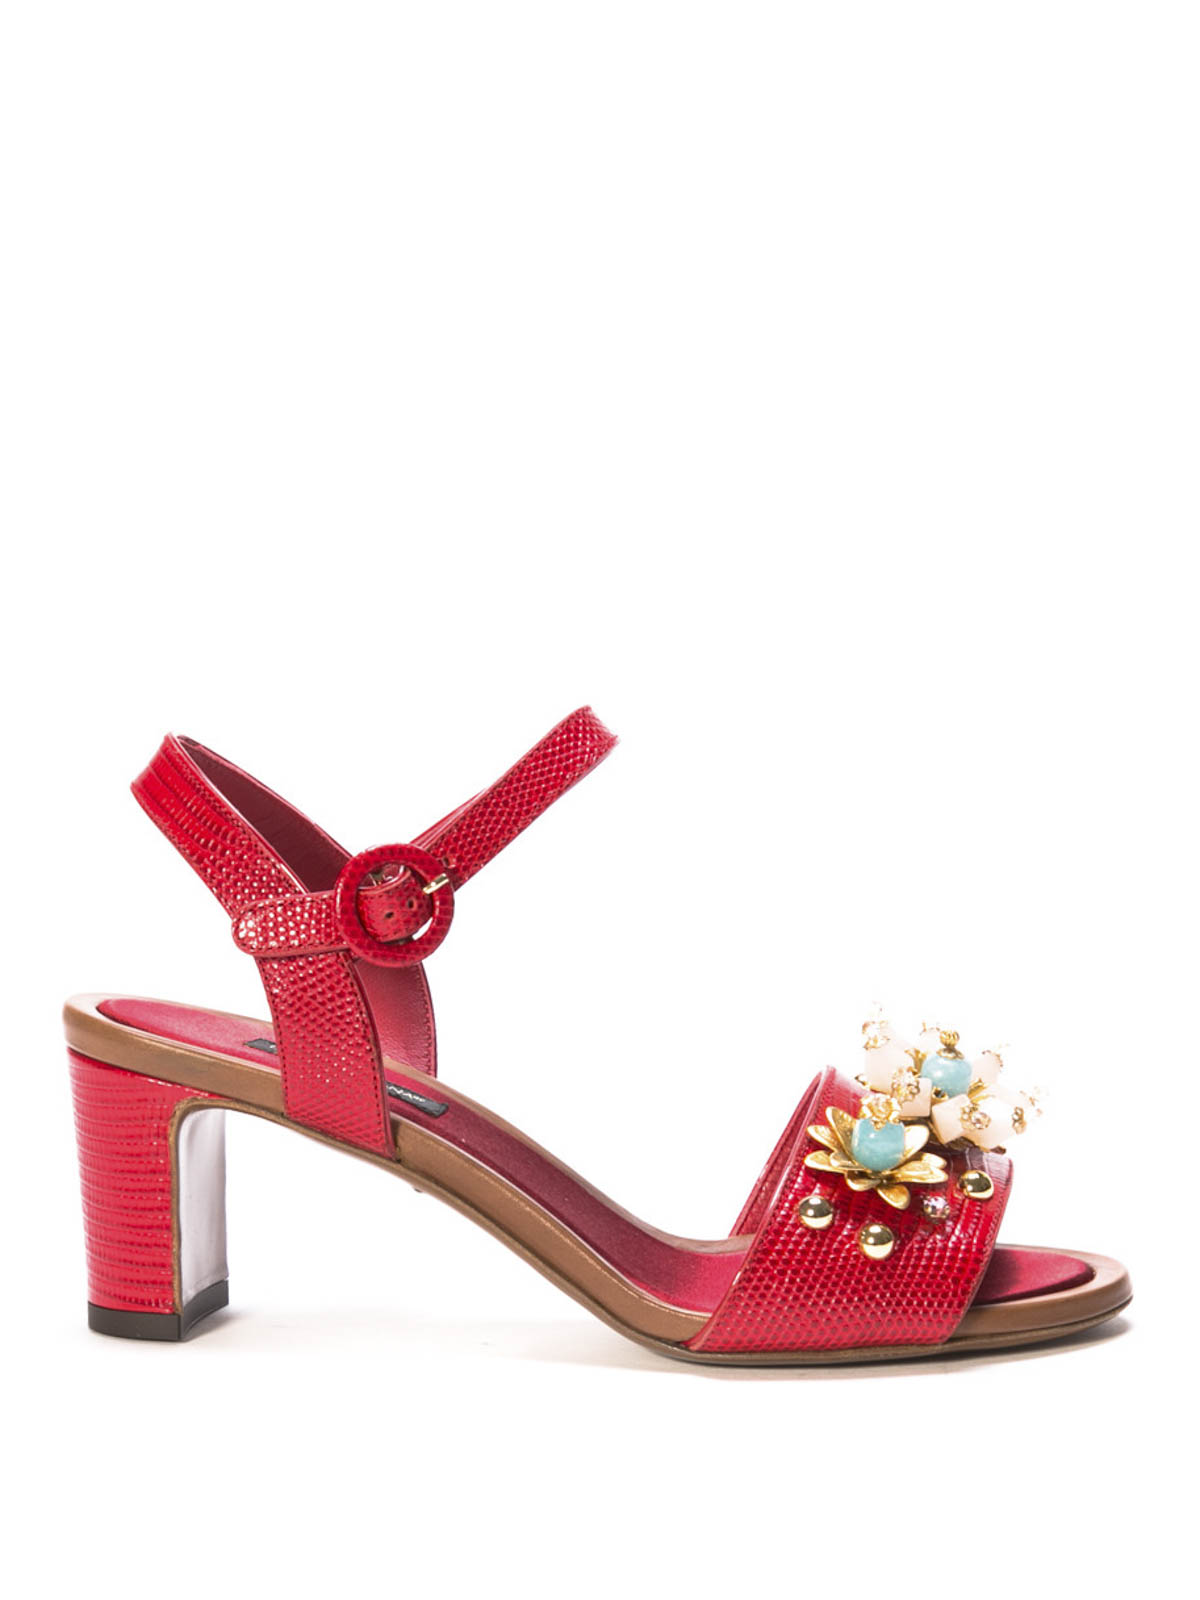 Dolce & Gabbana Leather Embellished Heeled Sandals 105 | Harrods AO